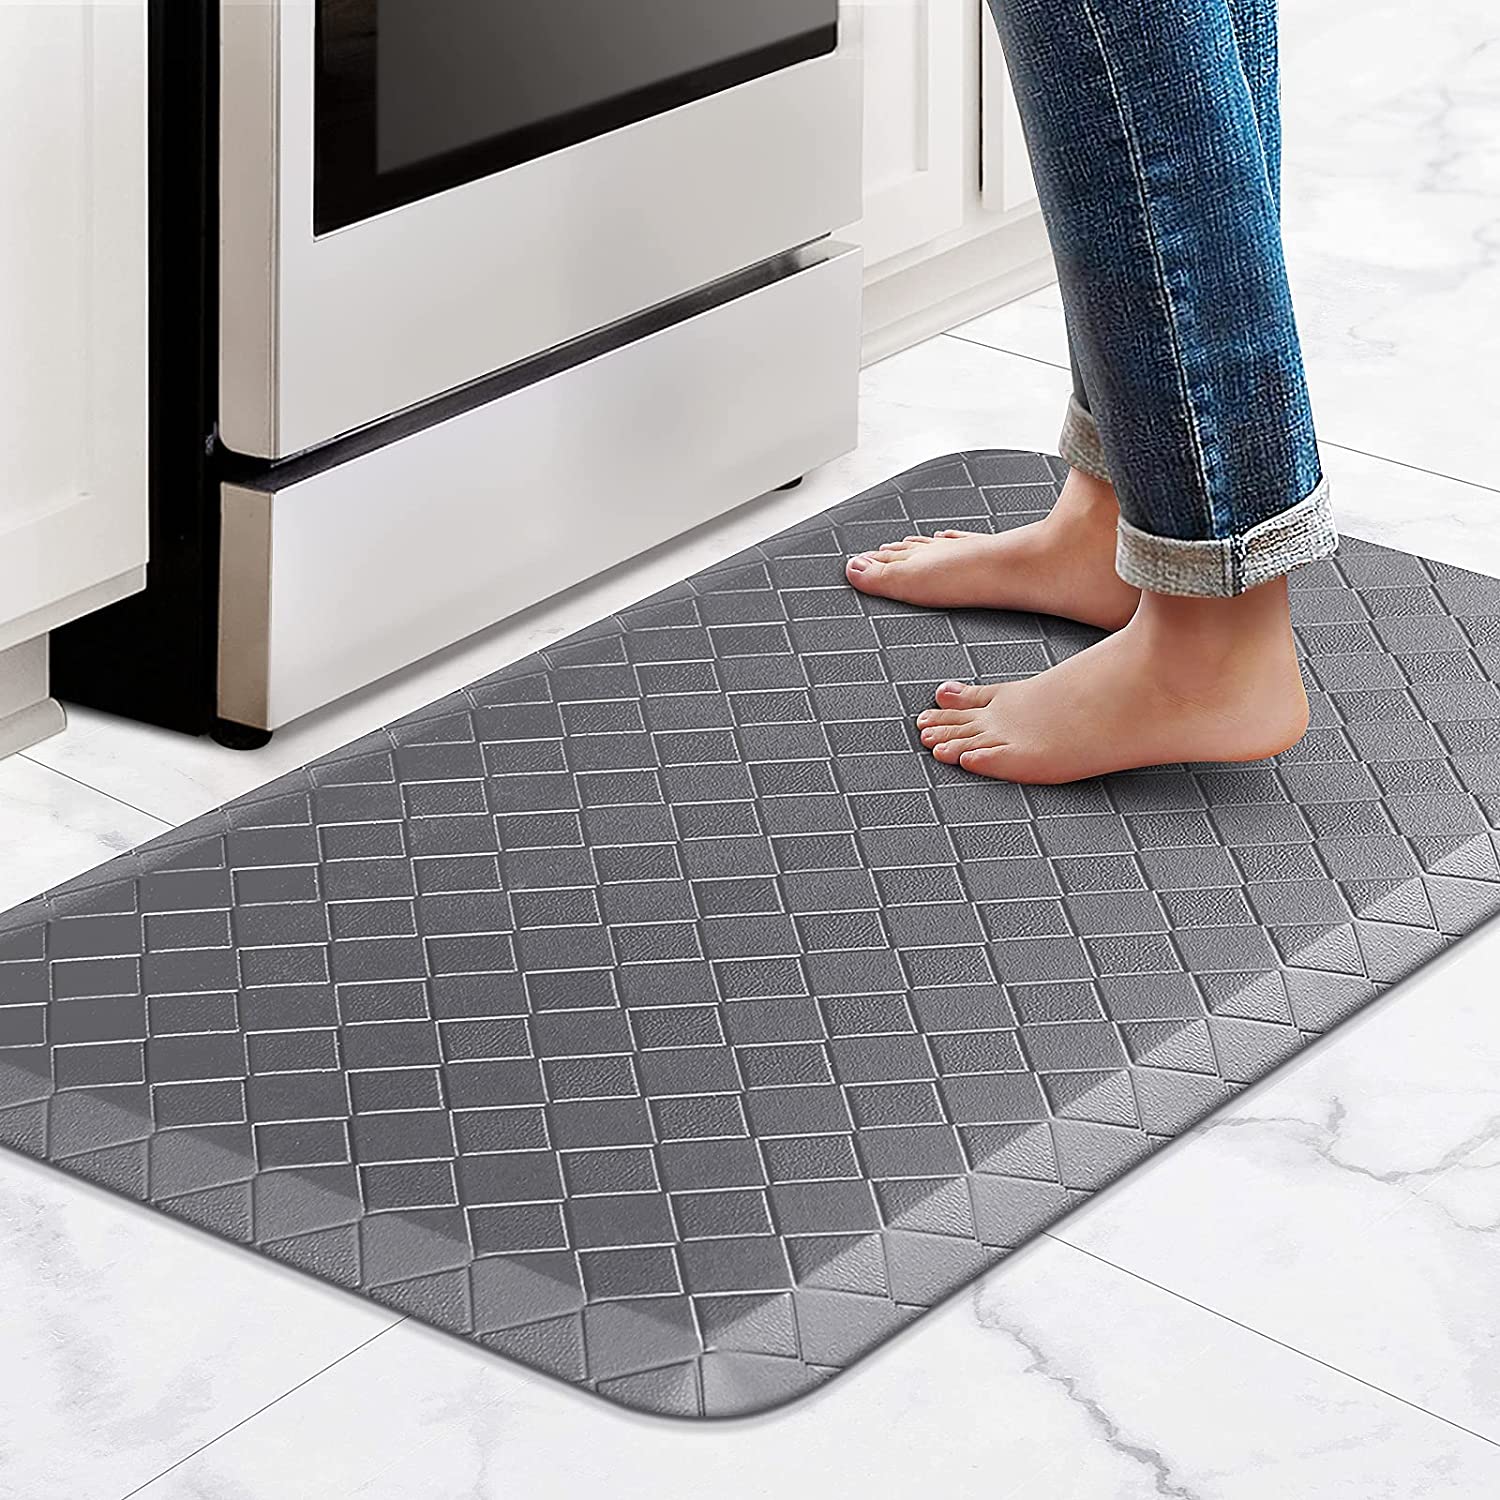 ComfiLife Memory Foam Anti-Fatigue Kitchen Floor Mat